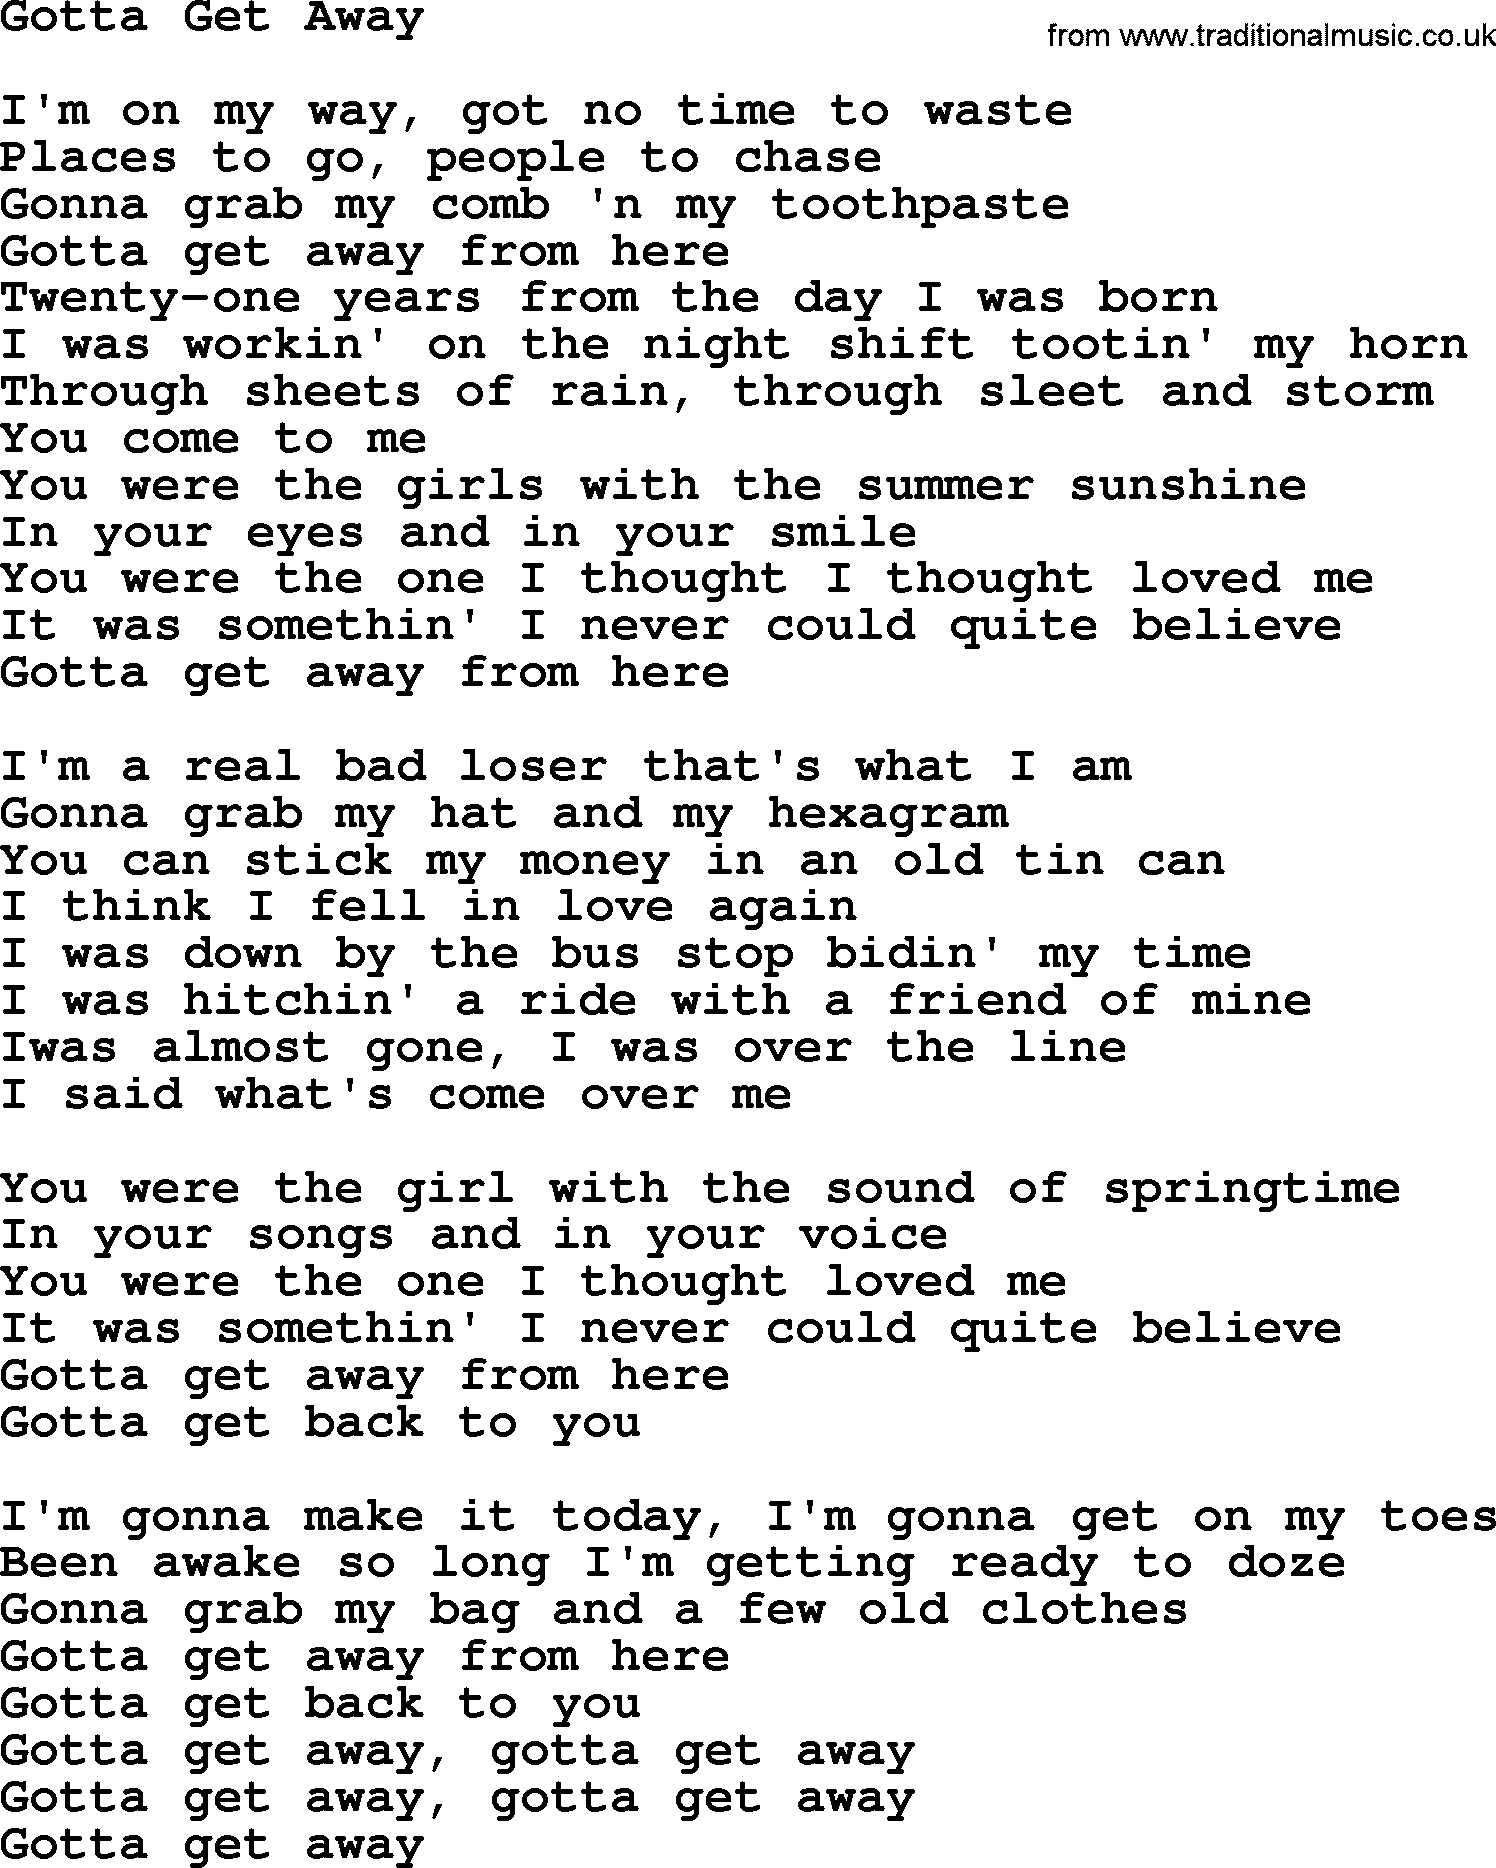 Gordon Lightfoot song Gotta Get Away, lyrics